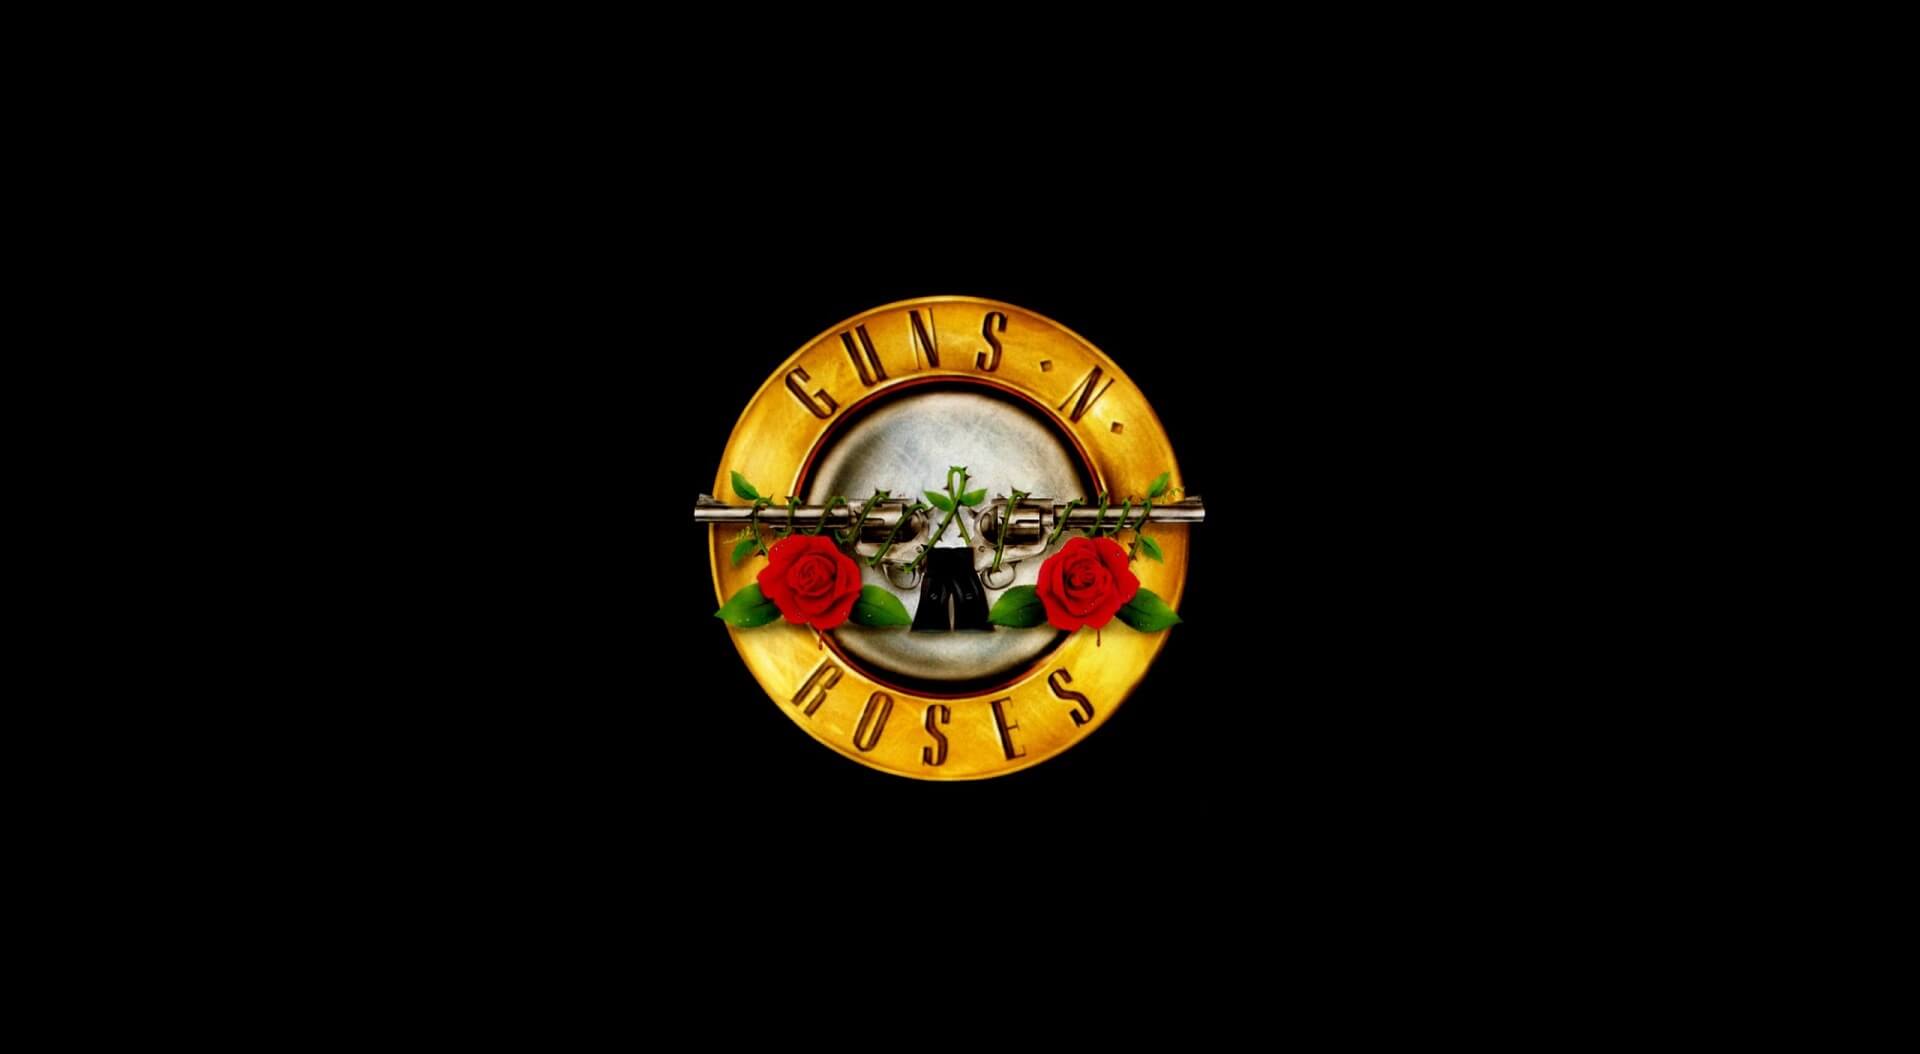 I Guns N' Roses tornano in Italia - Radio Mondo